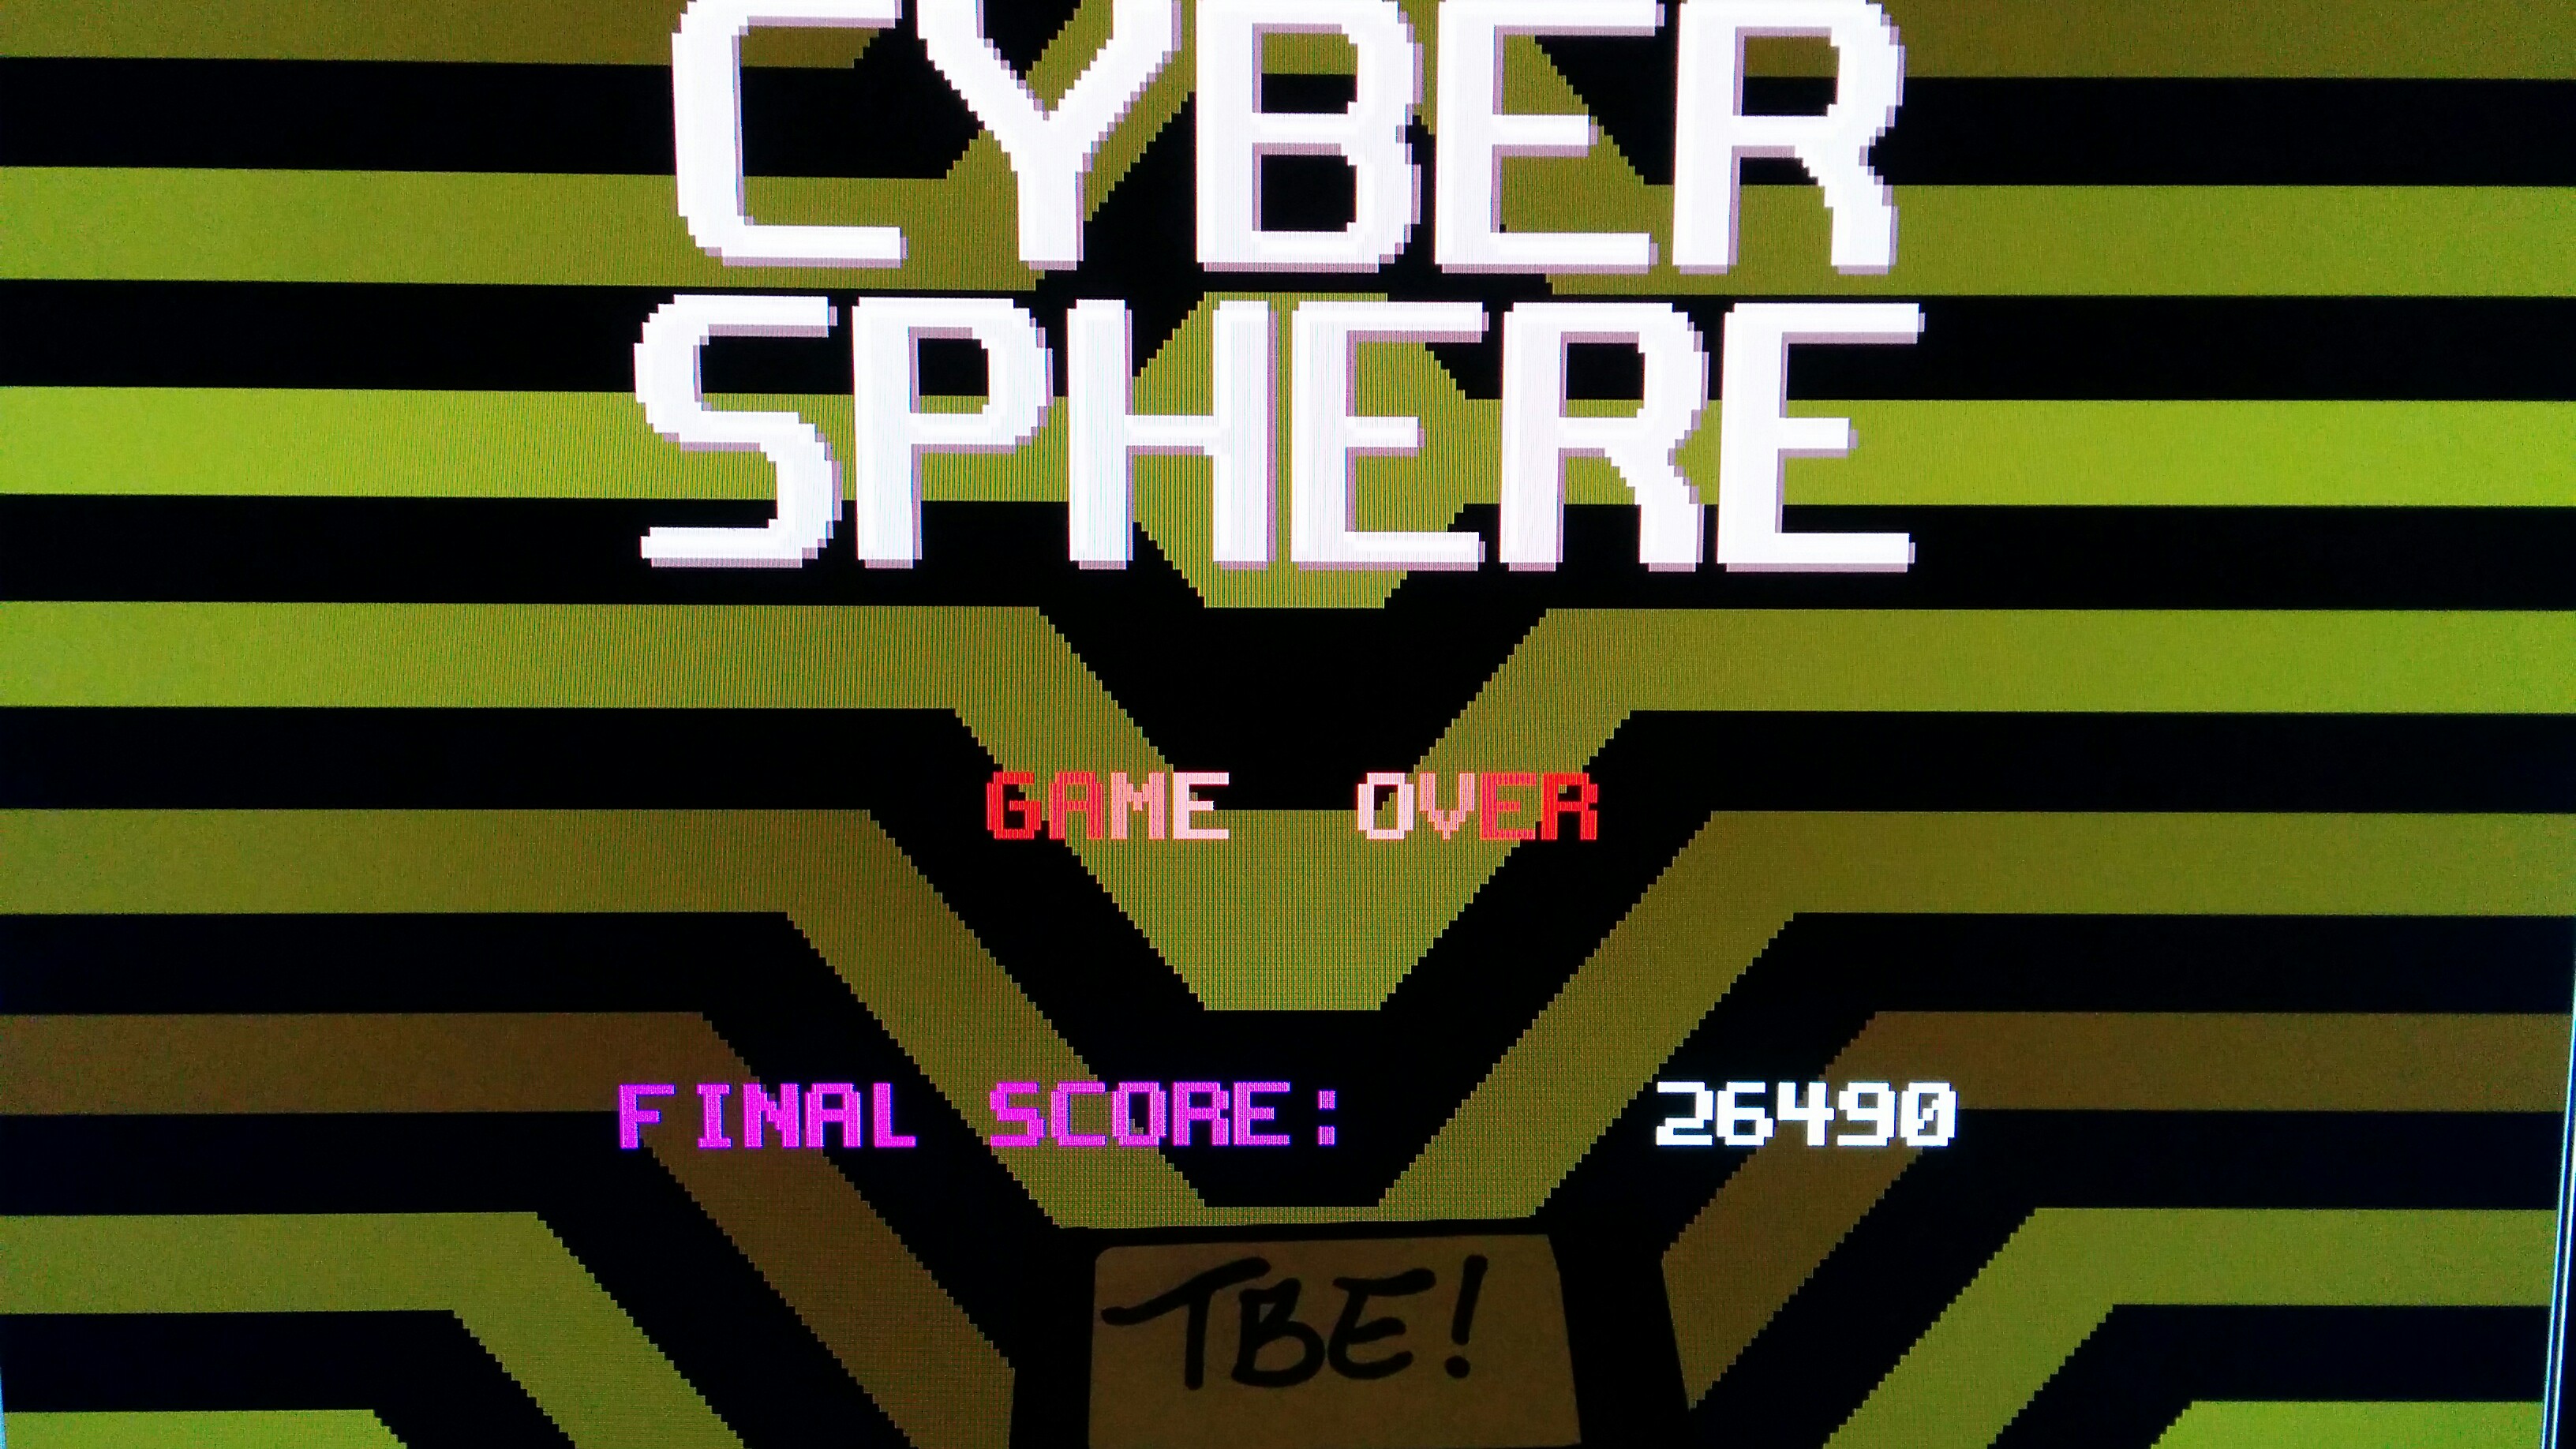 Sixx: Cybersphere [NTSC] (Amiga Emulated) 26,490 points on 2015-01-18 14:21:57